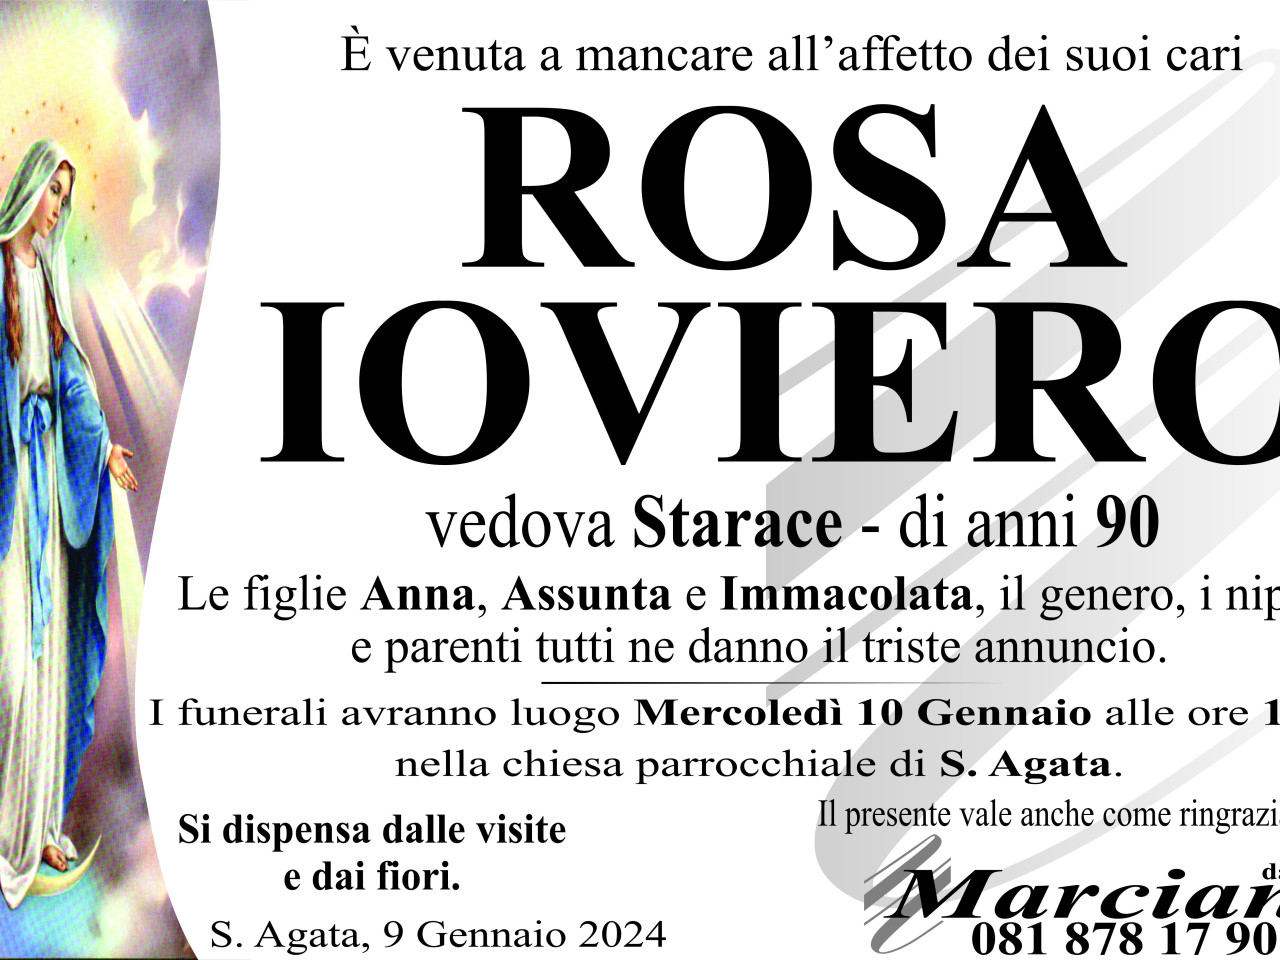 Rosa Ioviero